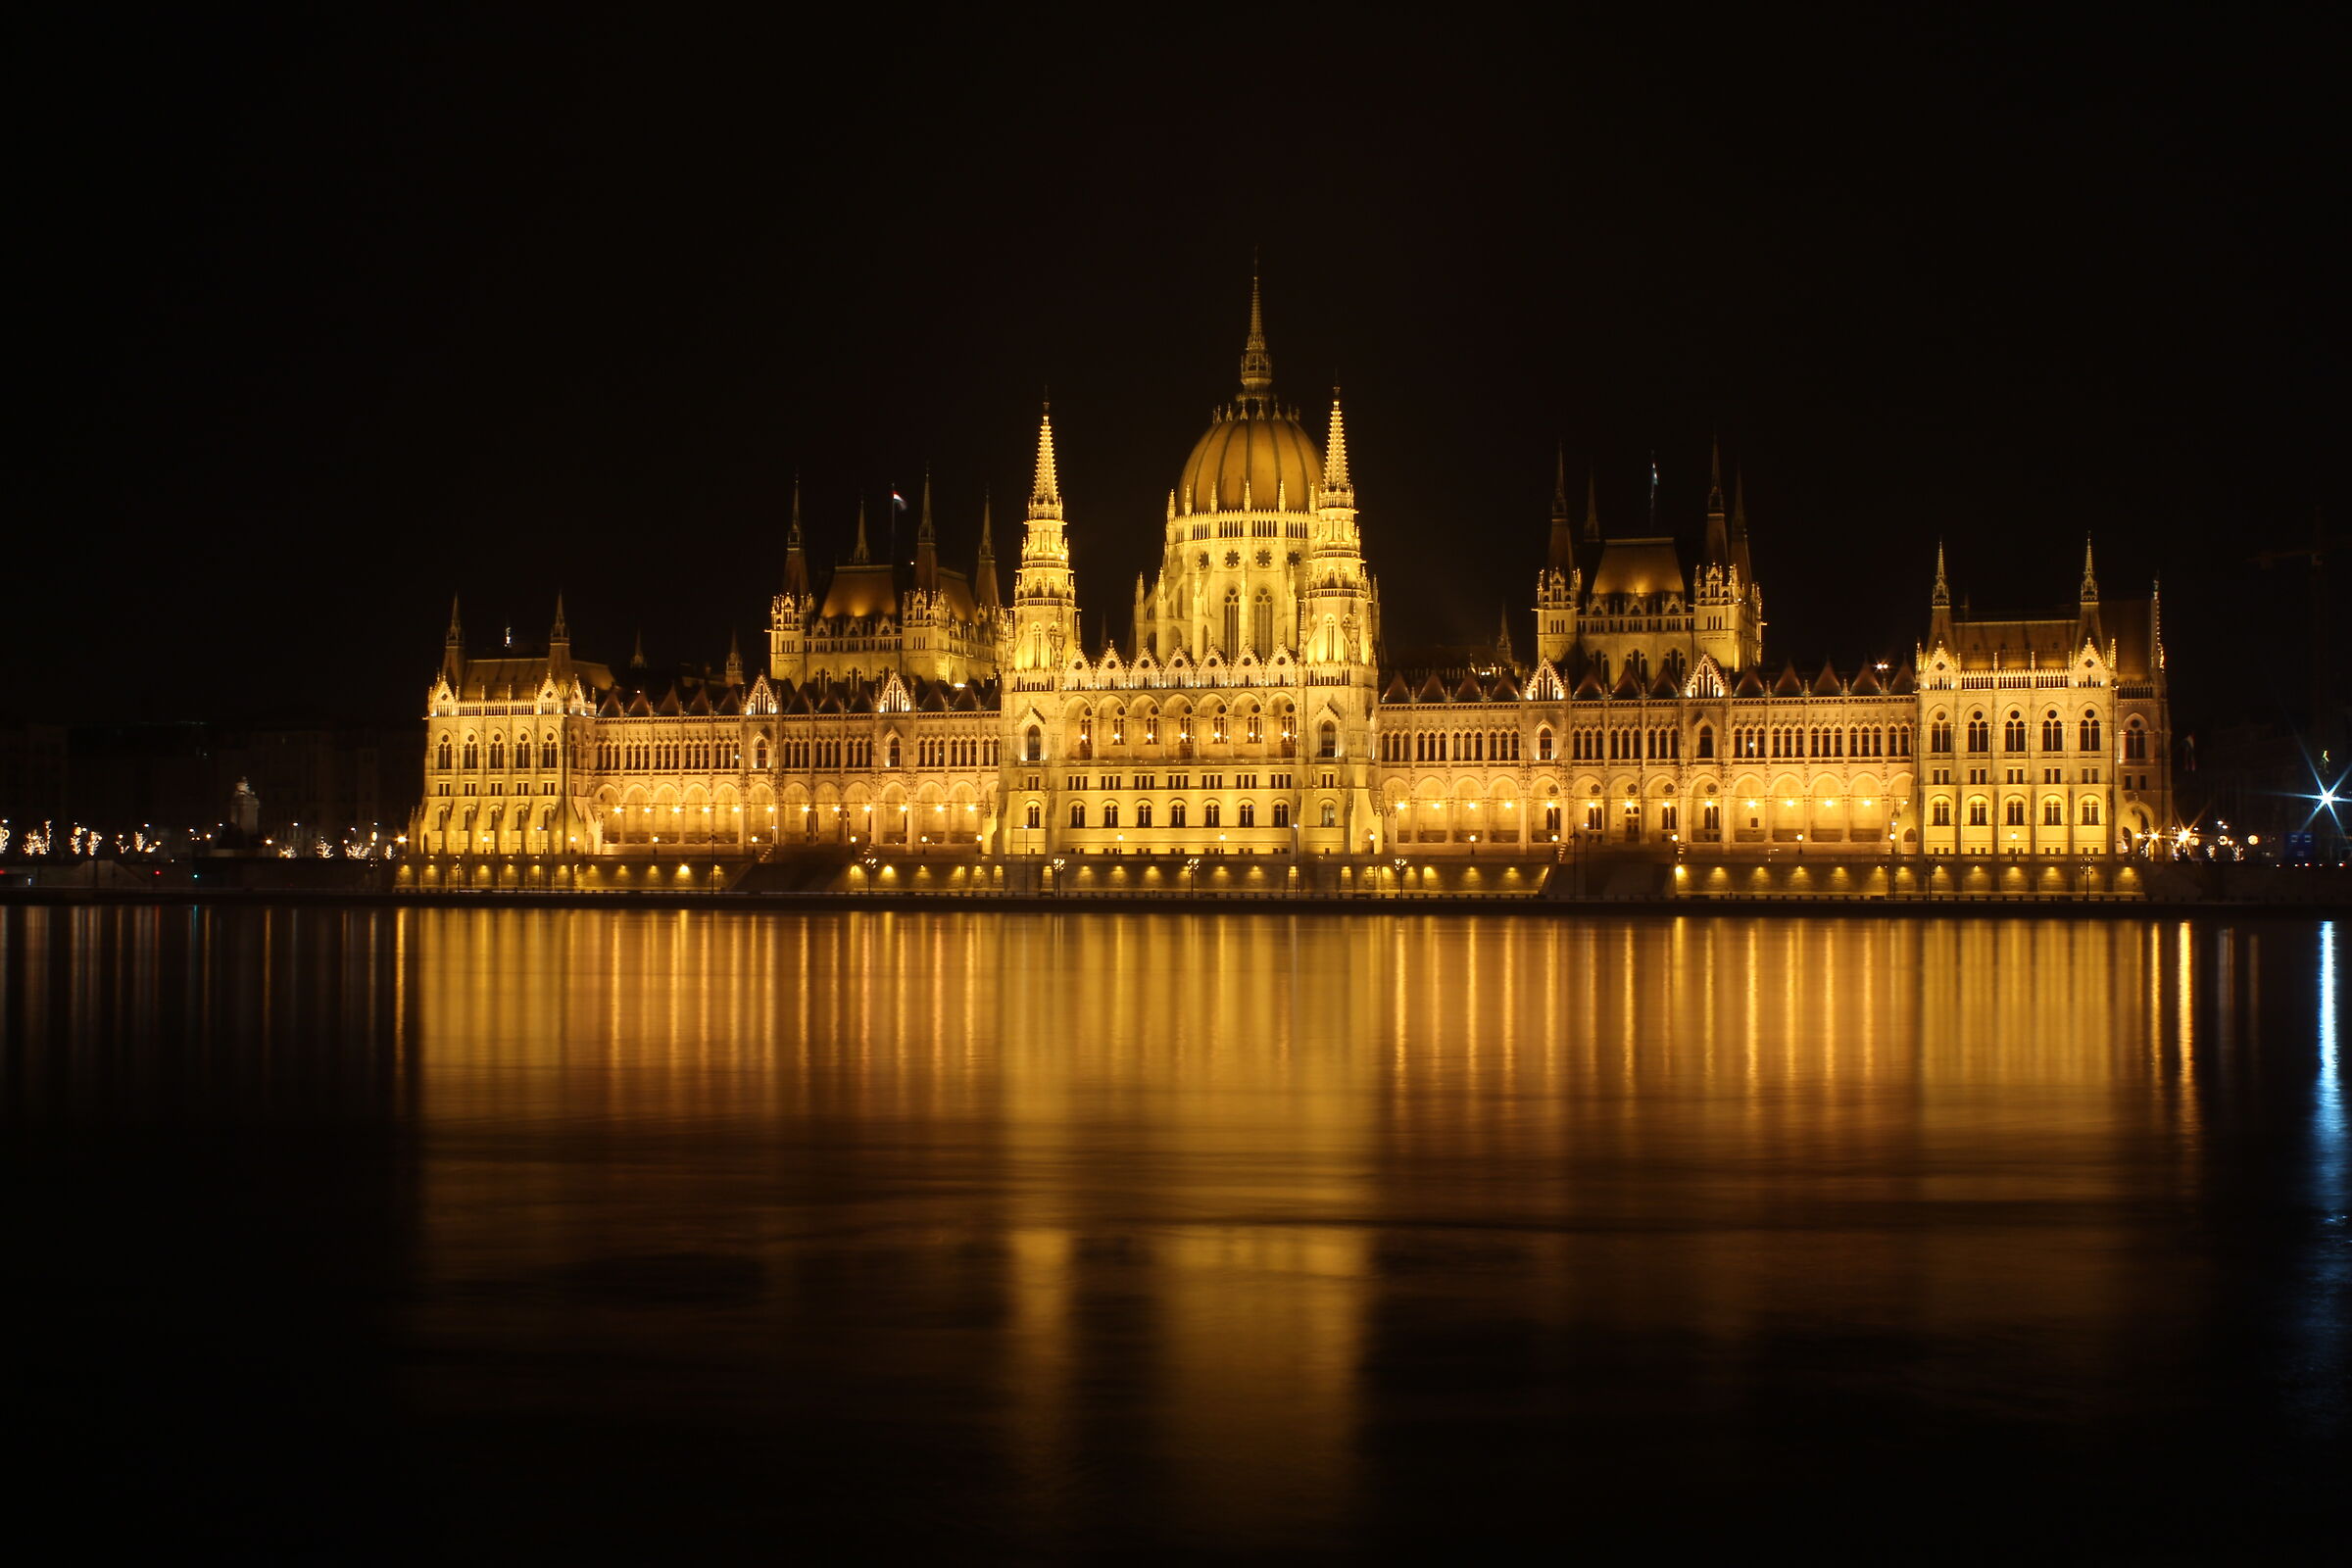 Parliament at night...